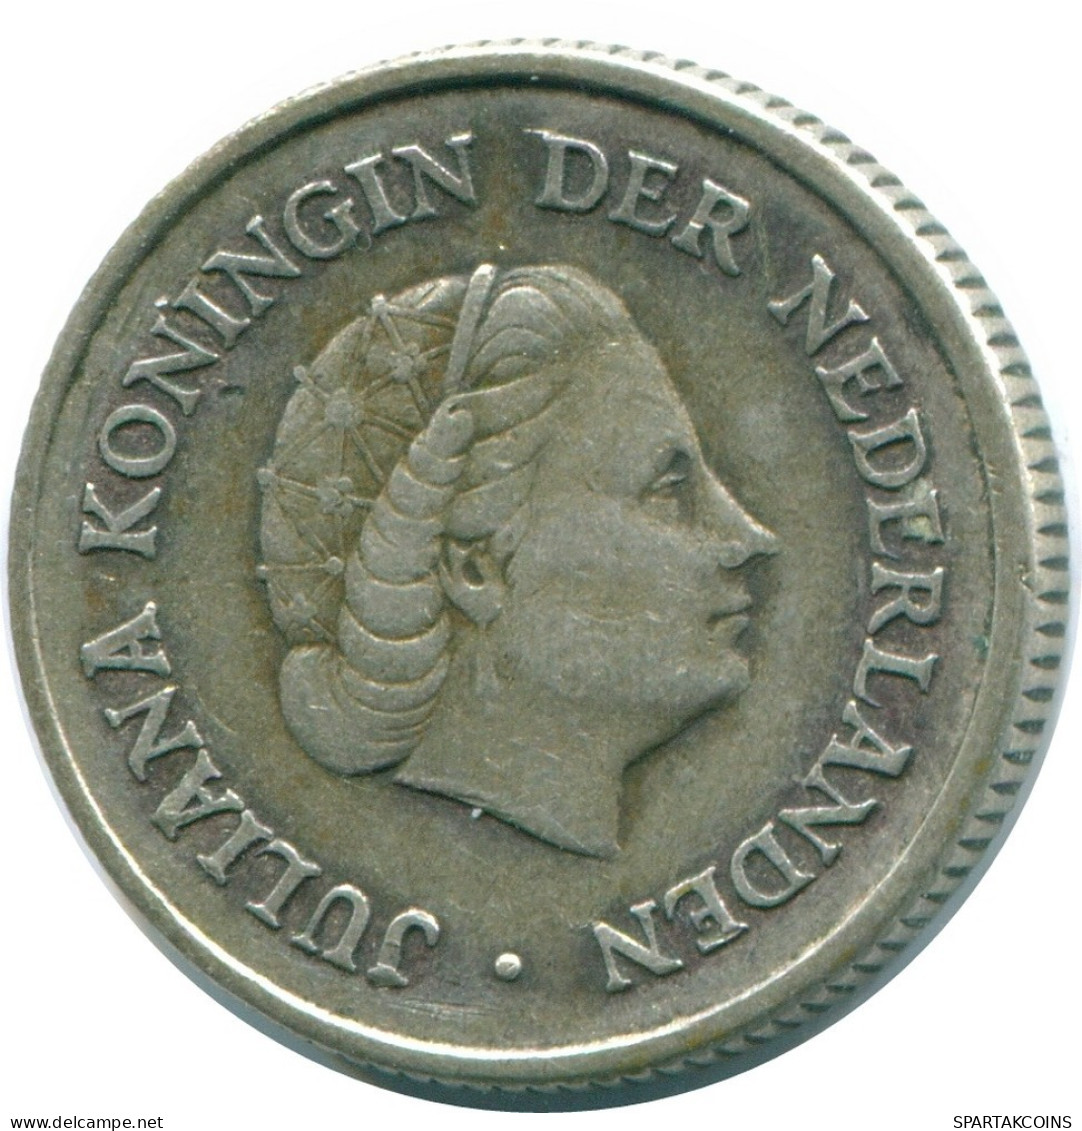 1/4 GULDEN 1963 NETHERLANDS ANTILLES SILVER Colonial Coin #NL11250.4.U.A - Antillas Neerlandesas